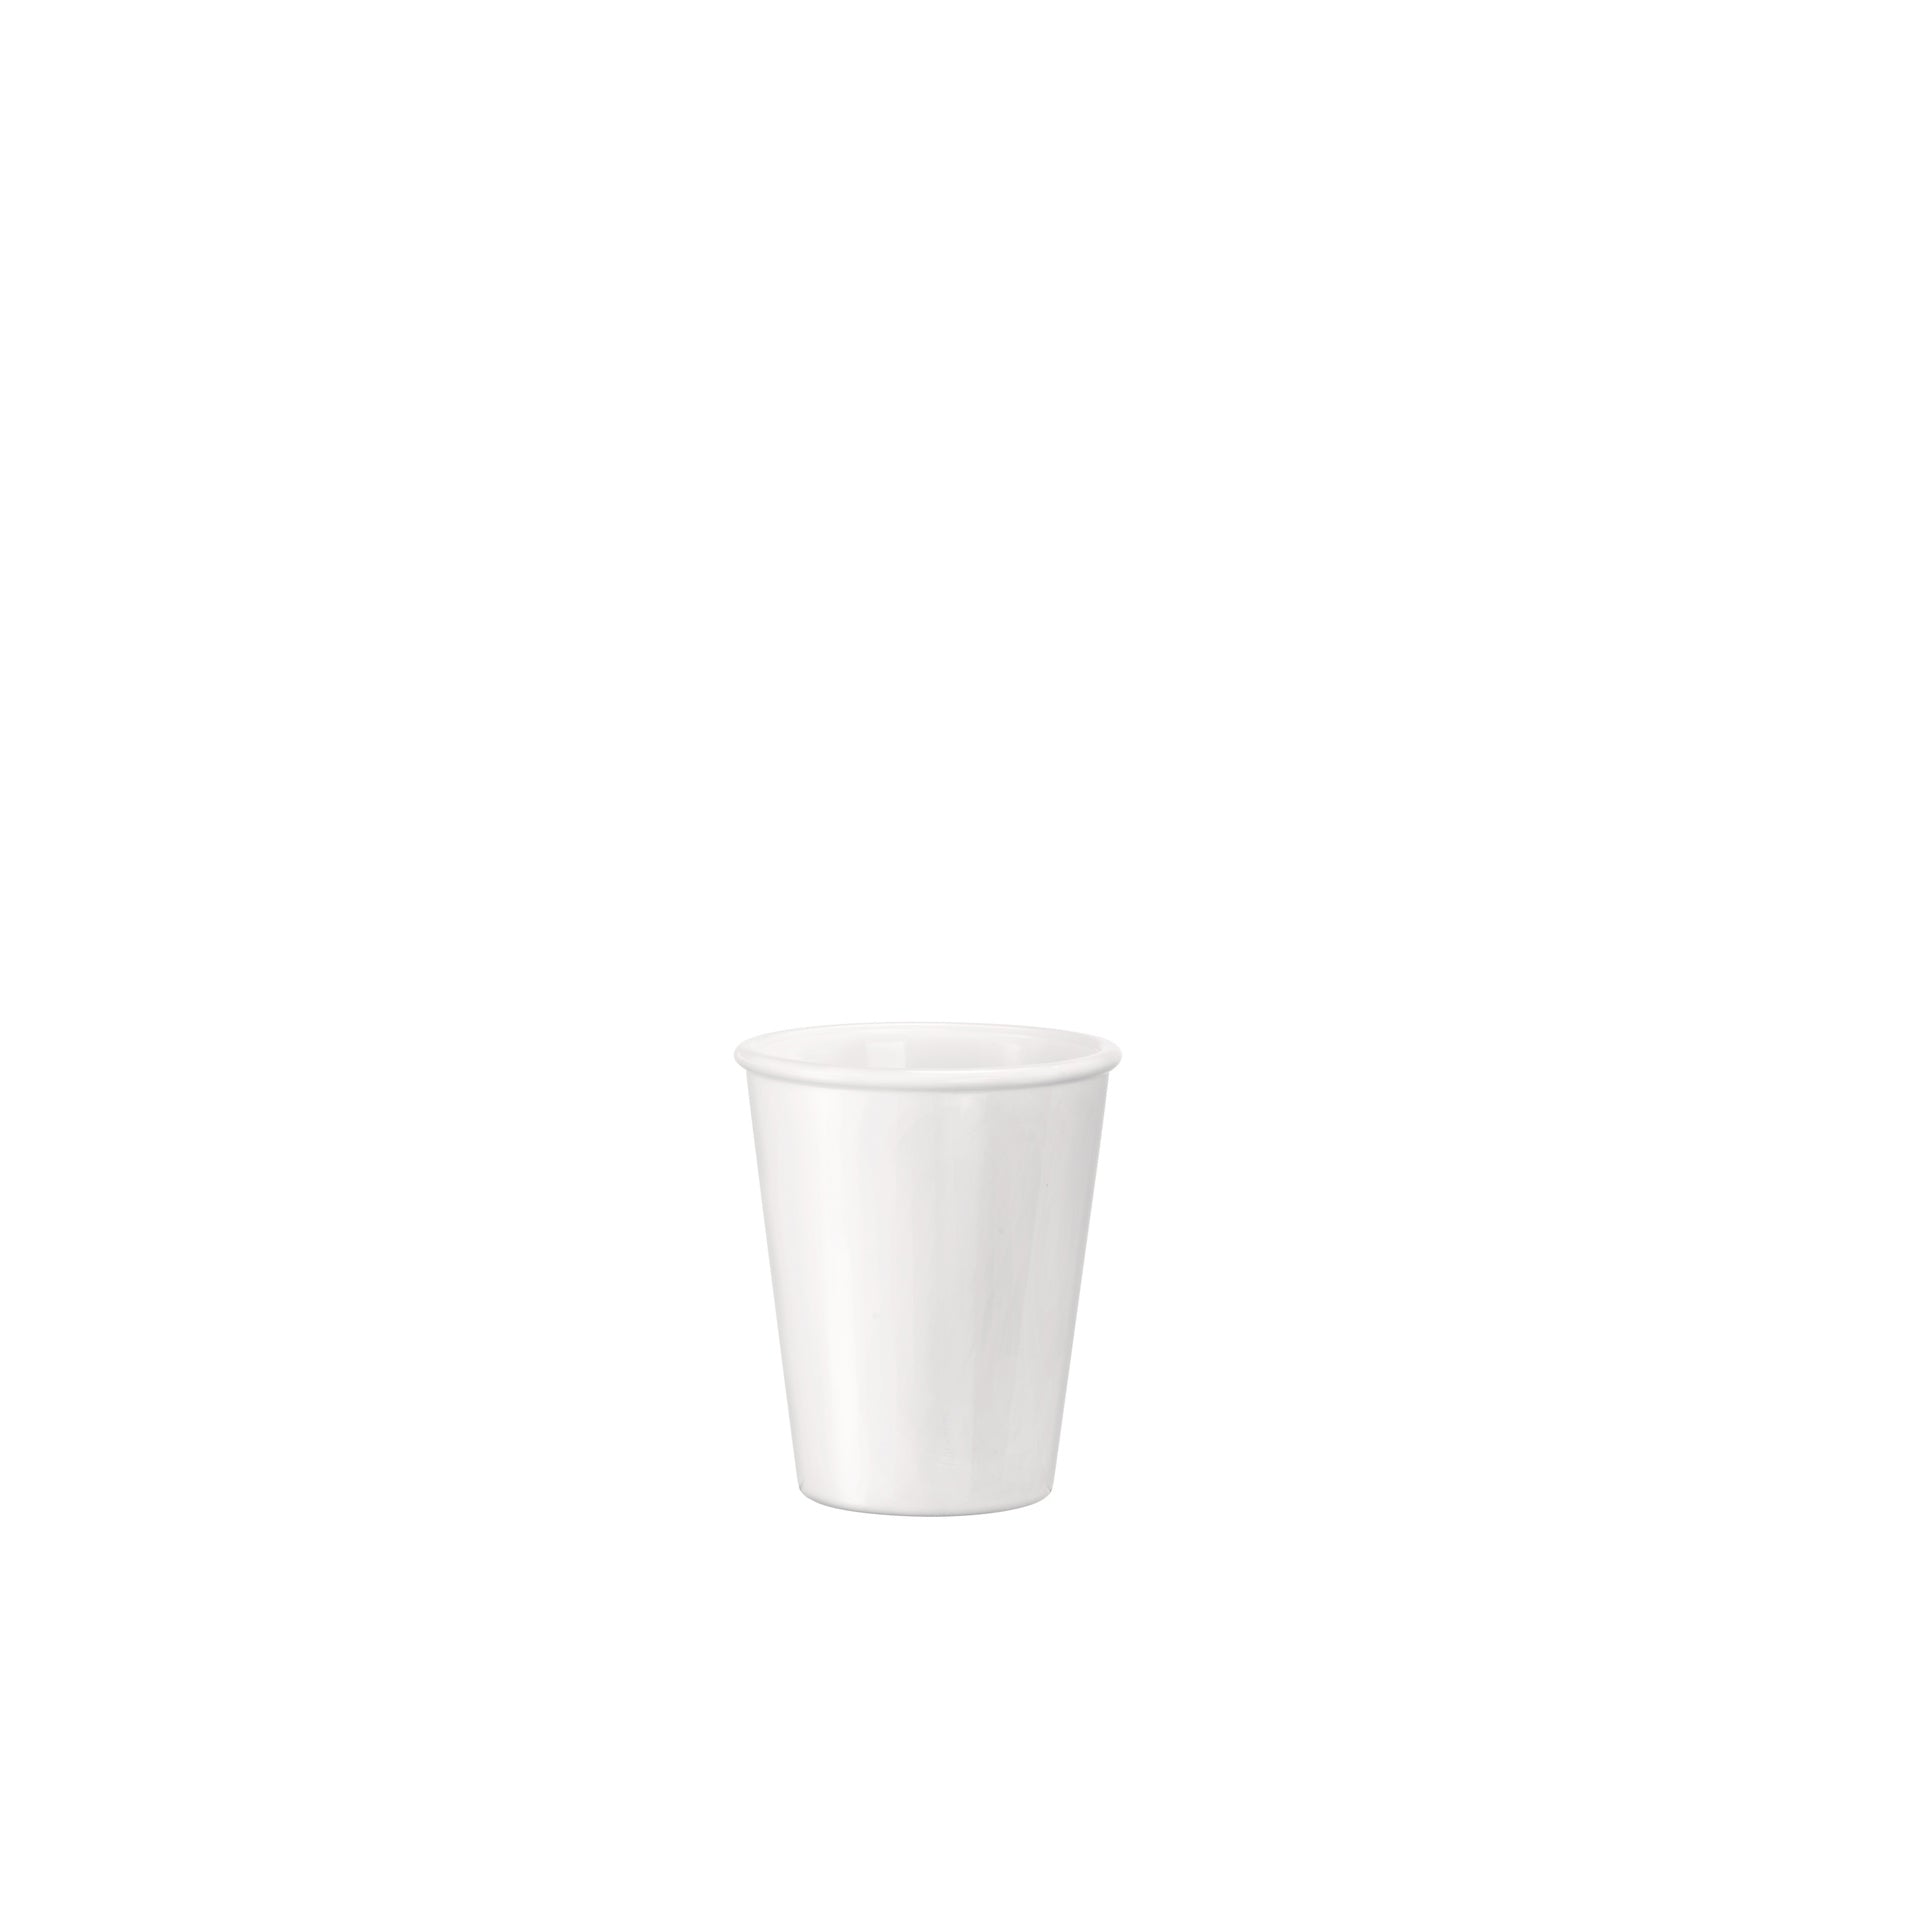 Aromateca 7.25 oz. Opal Glass Tea Cup (Set of 12)